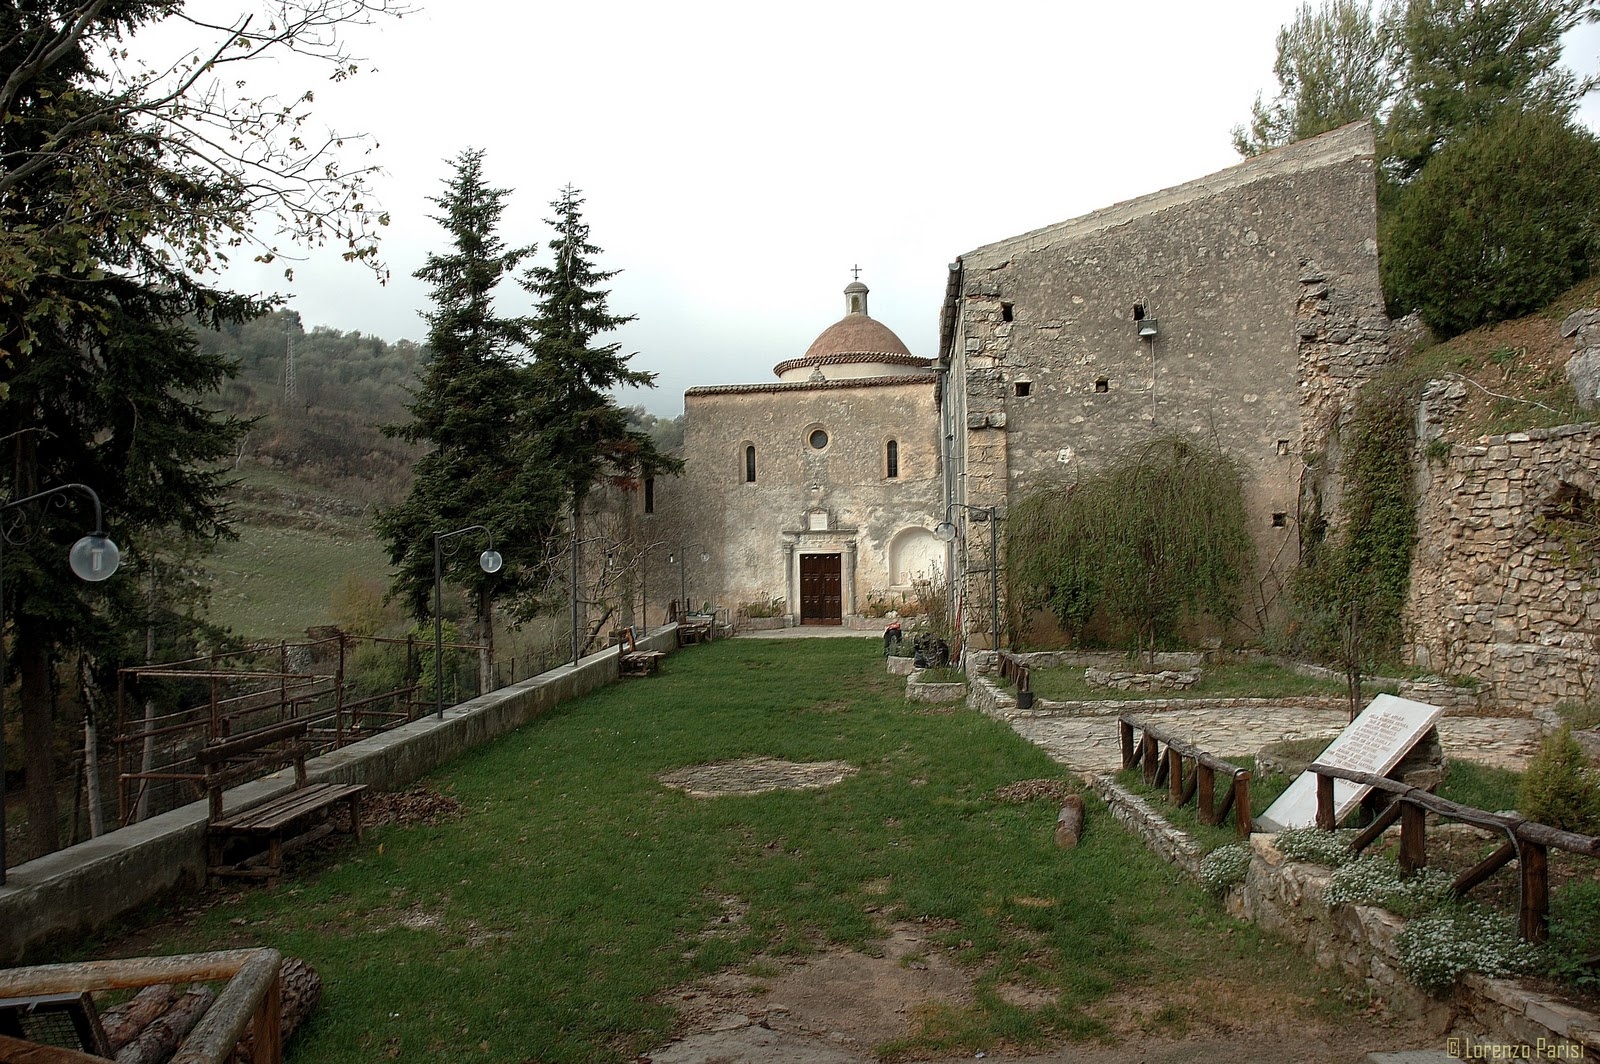 CHIESA DI S. MARIA PURA (chiesa, santuario) - Vico del Gargano (FG) 